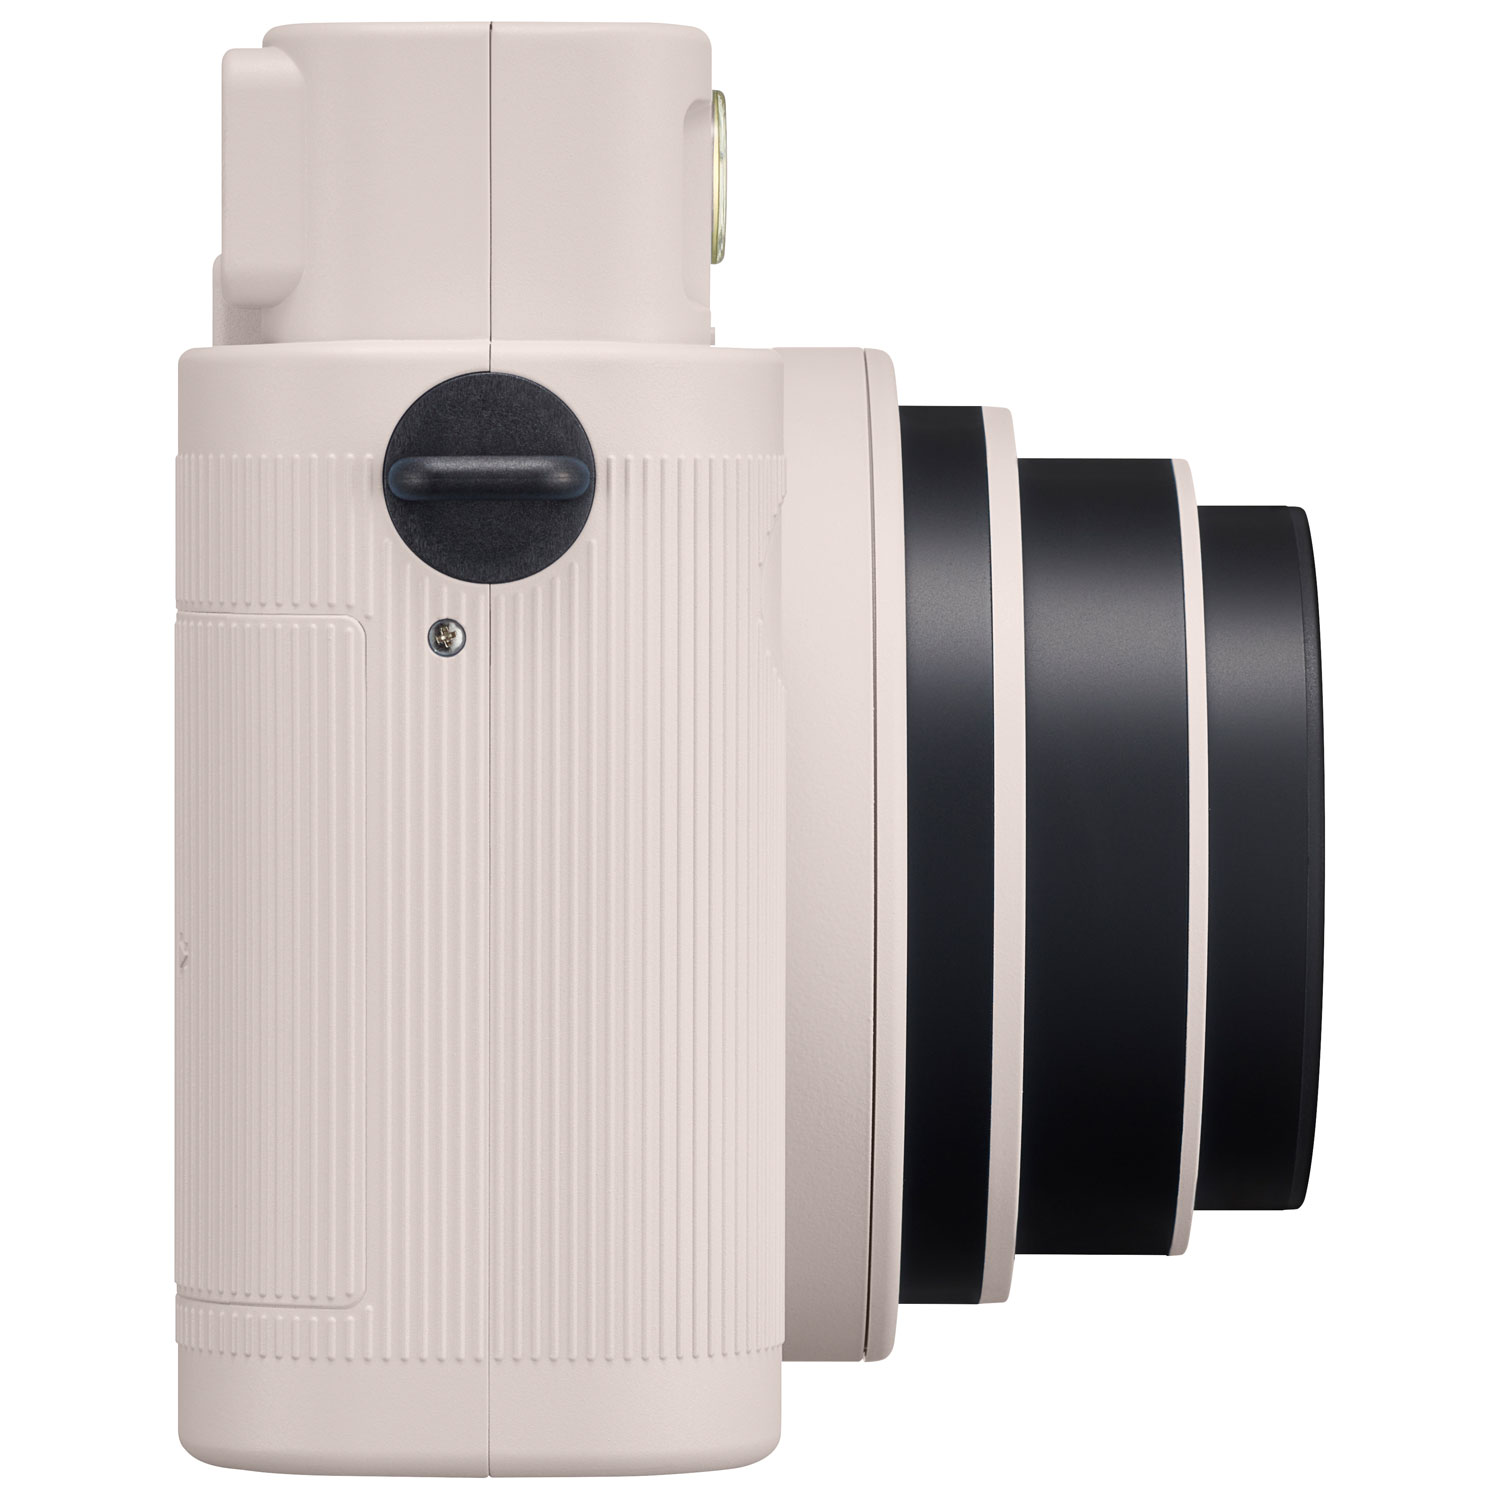 Fujifilm Instax Square SQ1 Instant Camera - Chalk White | Best Buy